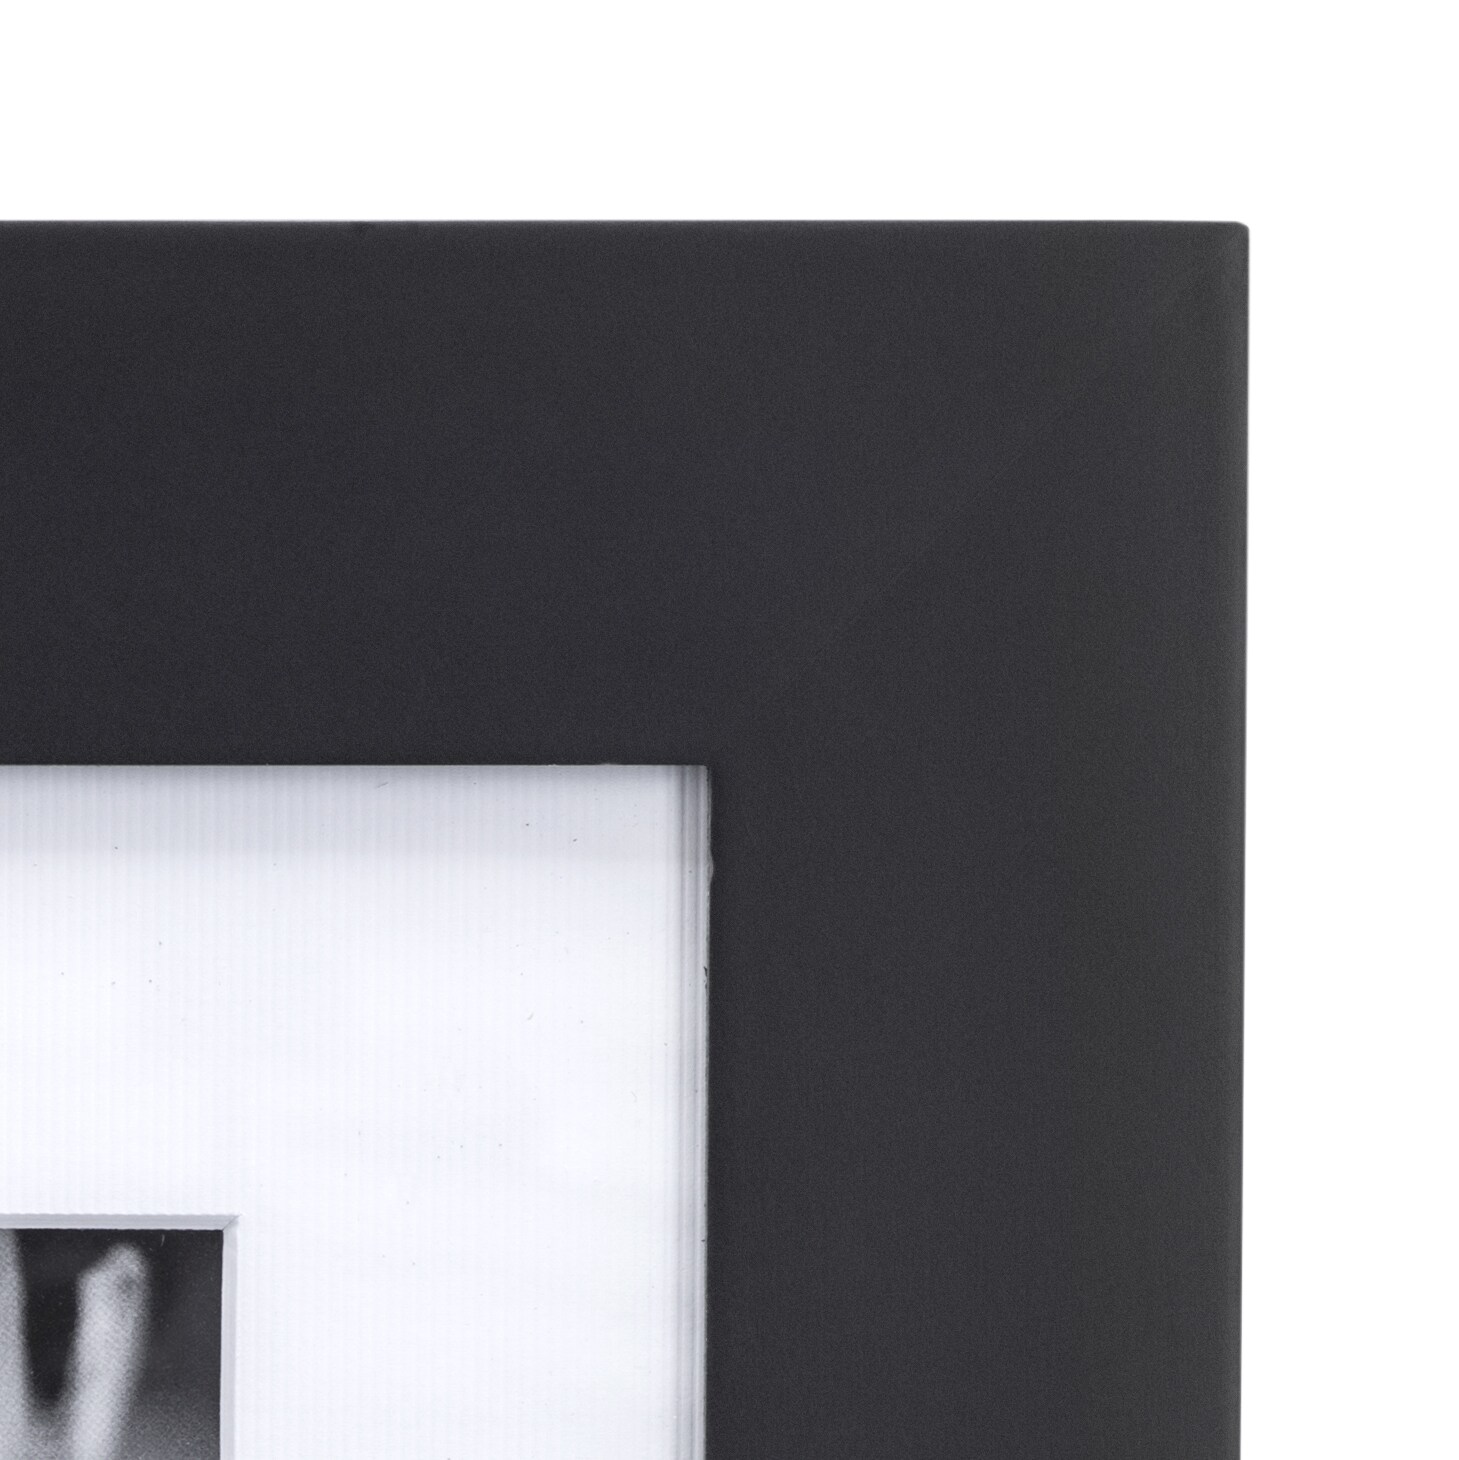 Malden International Designs Manhattan Matted Wall Picture Frame 5x7/8x10 4 Pack Black